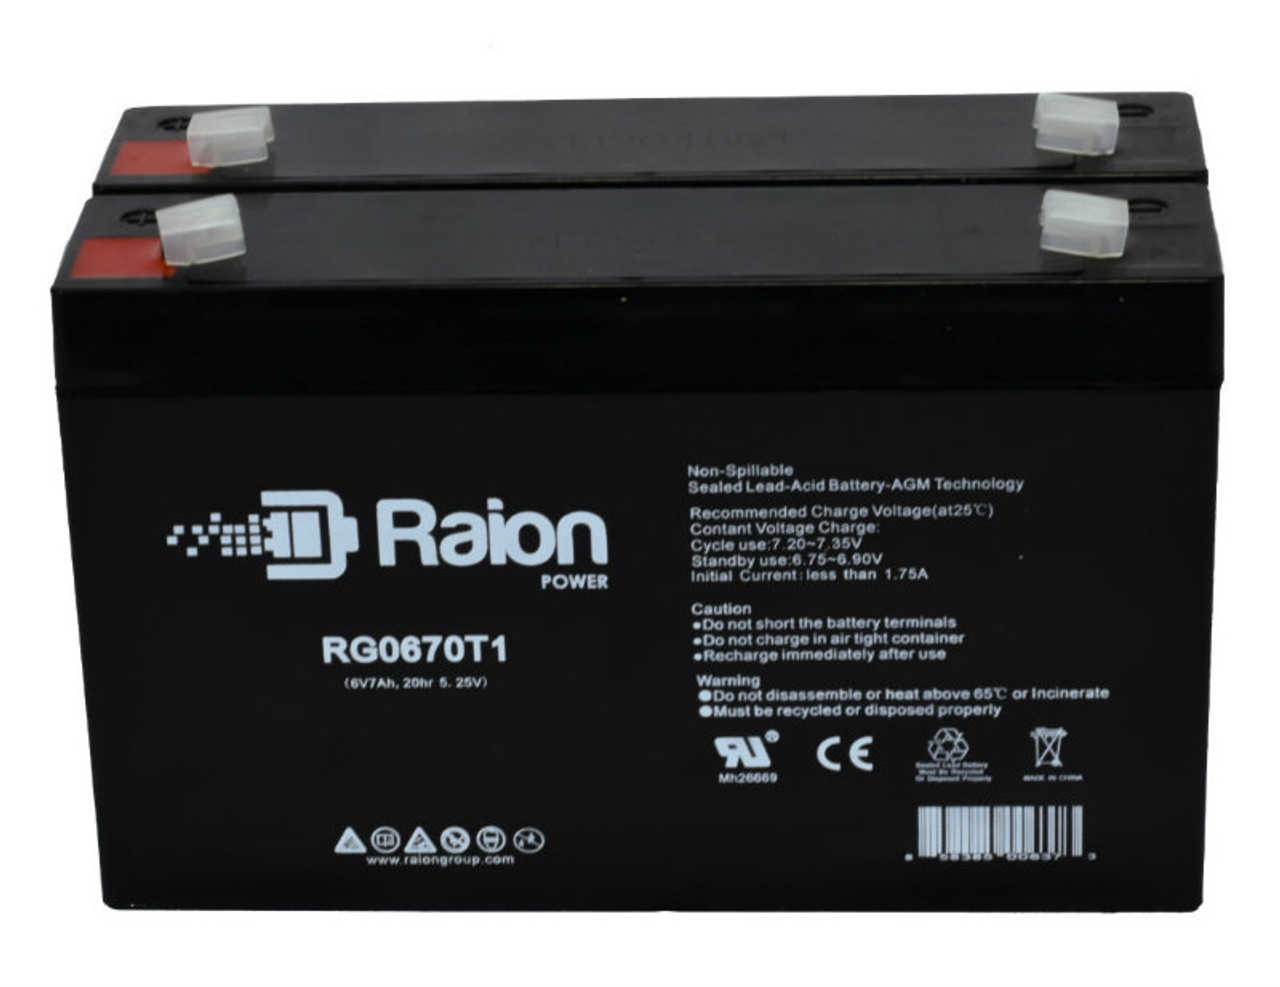 Raion Power RG0670T1 6V 7Ah Replacement Emergency Light Battery for Sure-Lites 12V1504 - 2 Pack